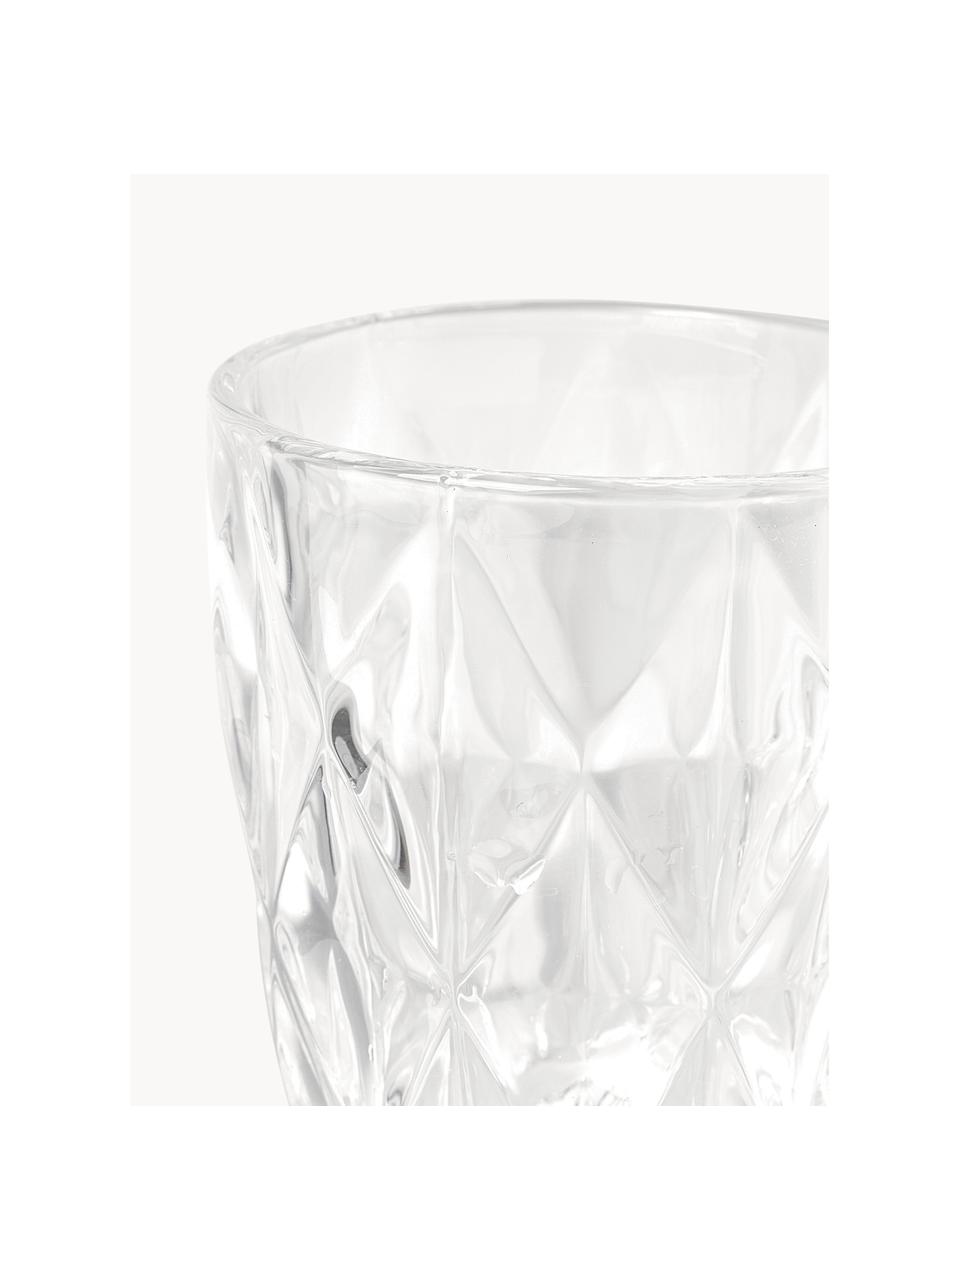 Waterglazen Colorado met structuurpatroon, 4 stuks, Glas, Transparant, Ø 8 x H 10 cm, 260 ml